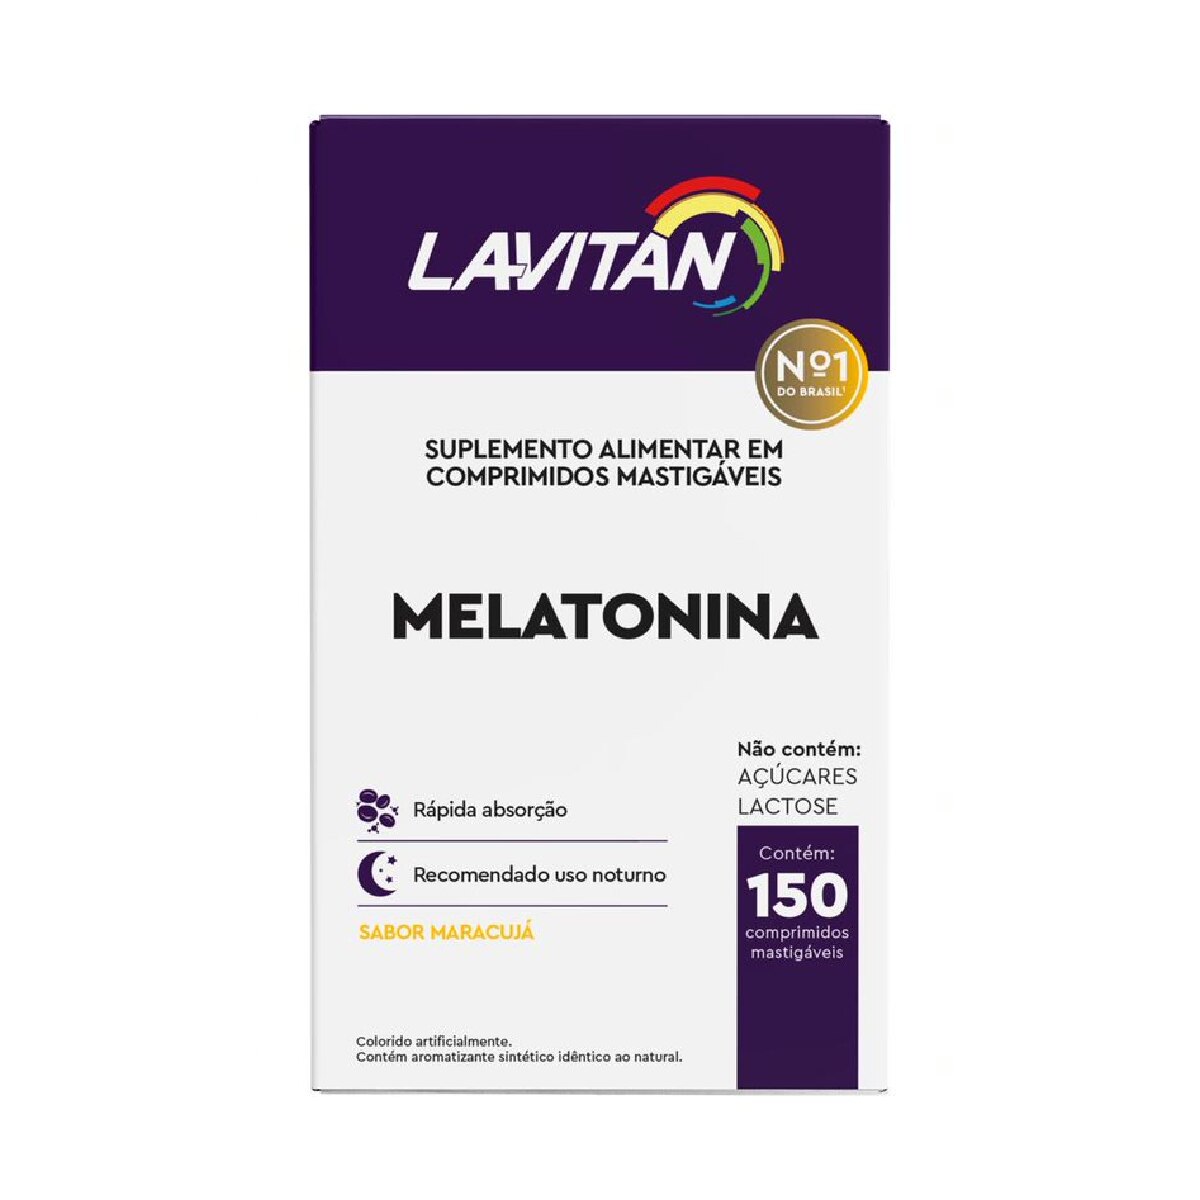 Melatonina Lavitan Sabor Maracuja 150 Comprimidos Mastigaveis